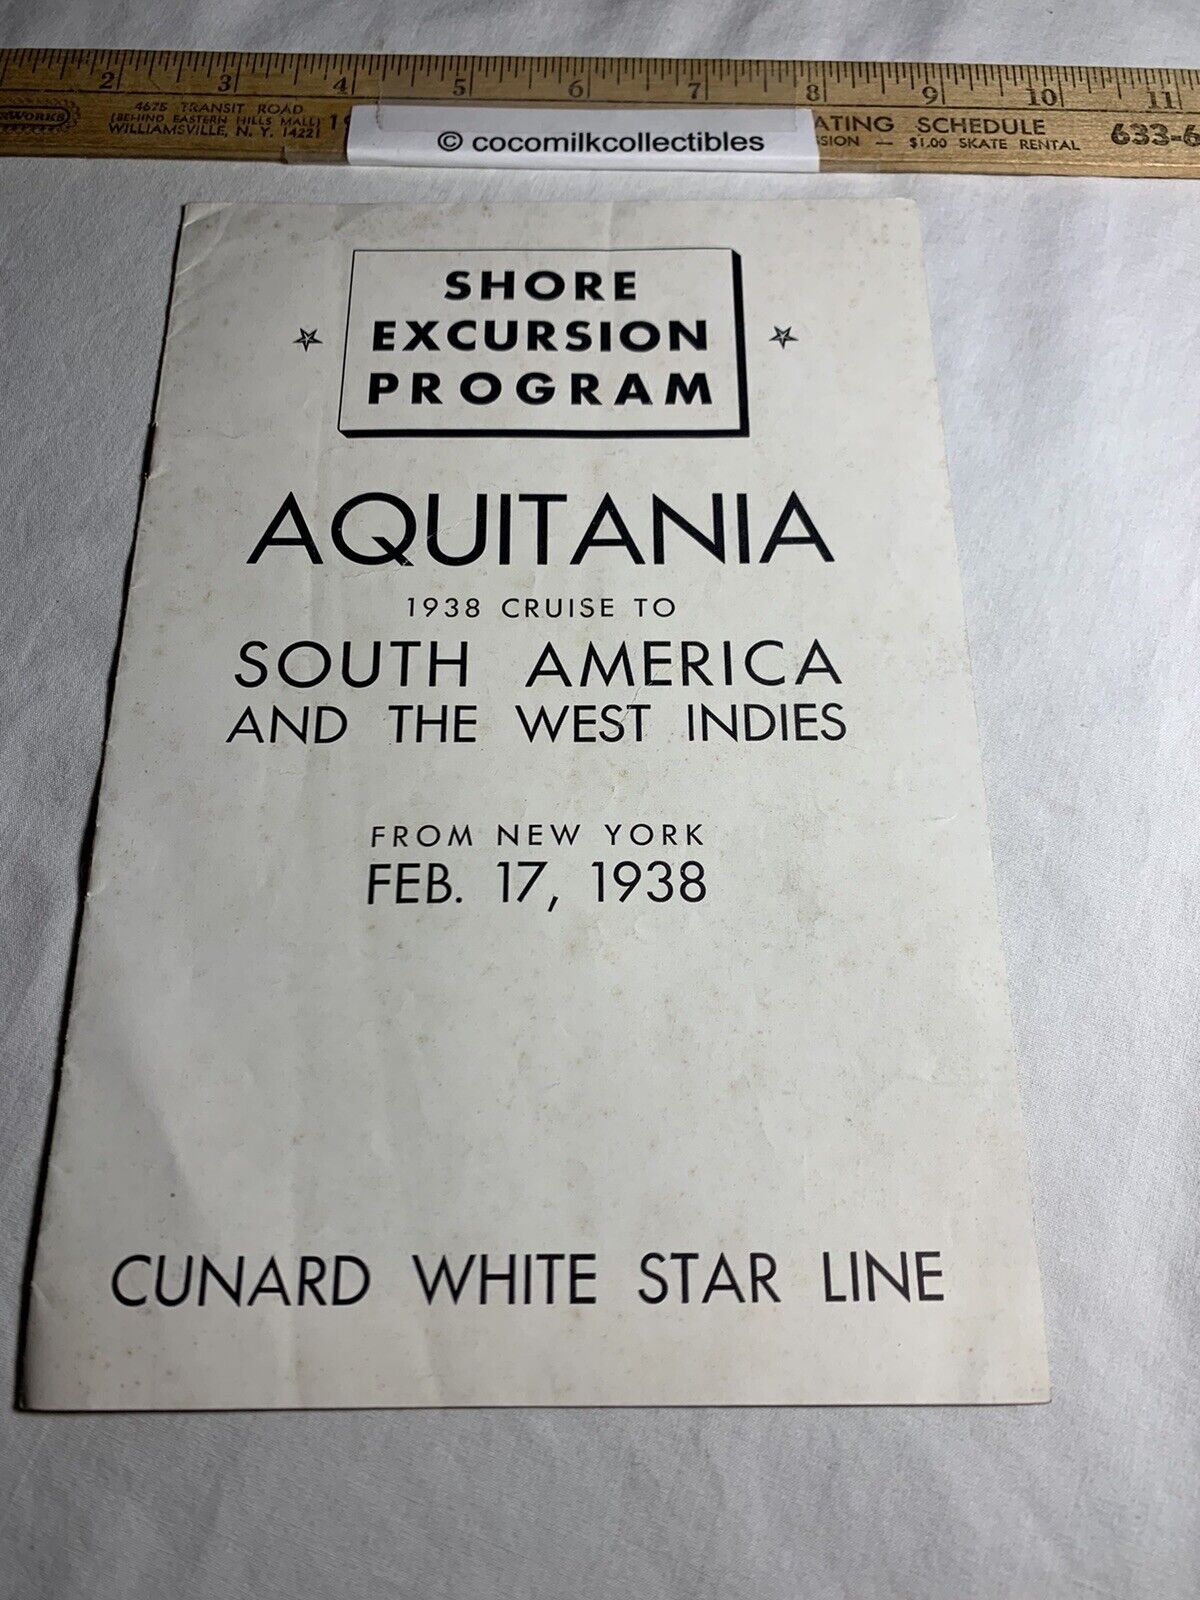 Vintage 1938 Shore Excursion Program S S Aquitania Cruise South America W Indies